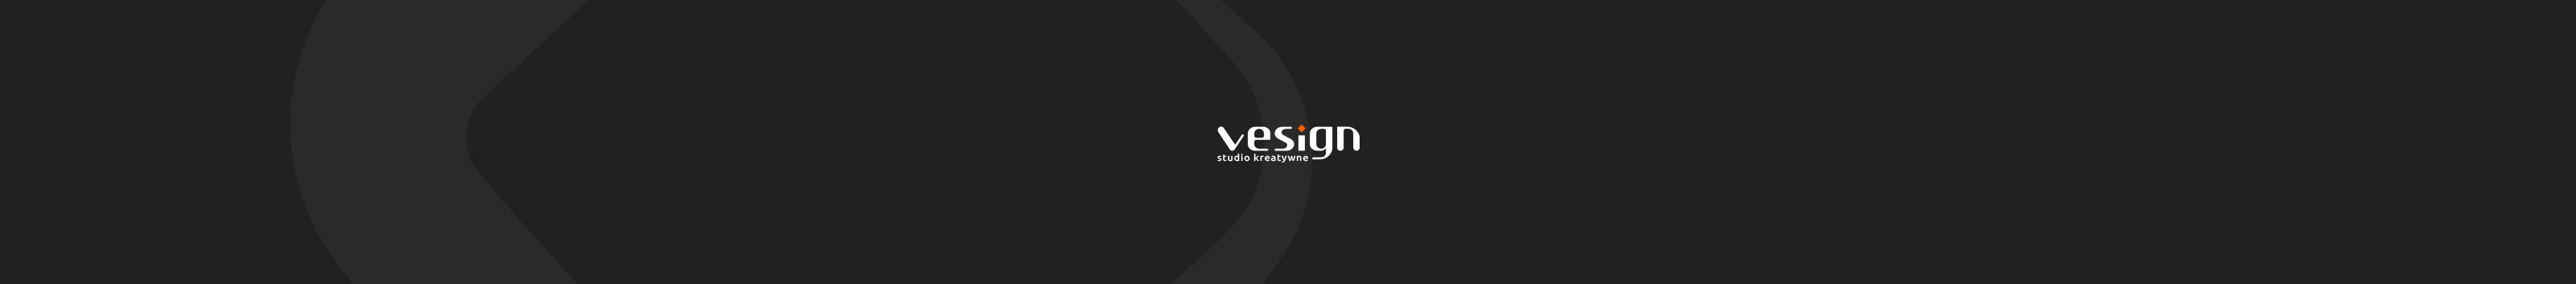 vesign | studio kreatywne's profile banner